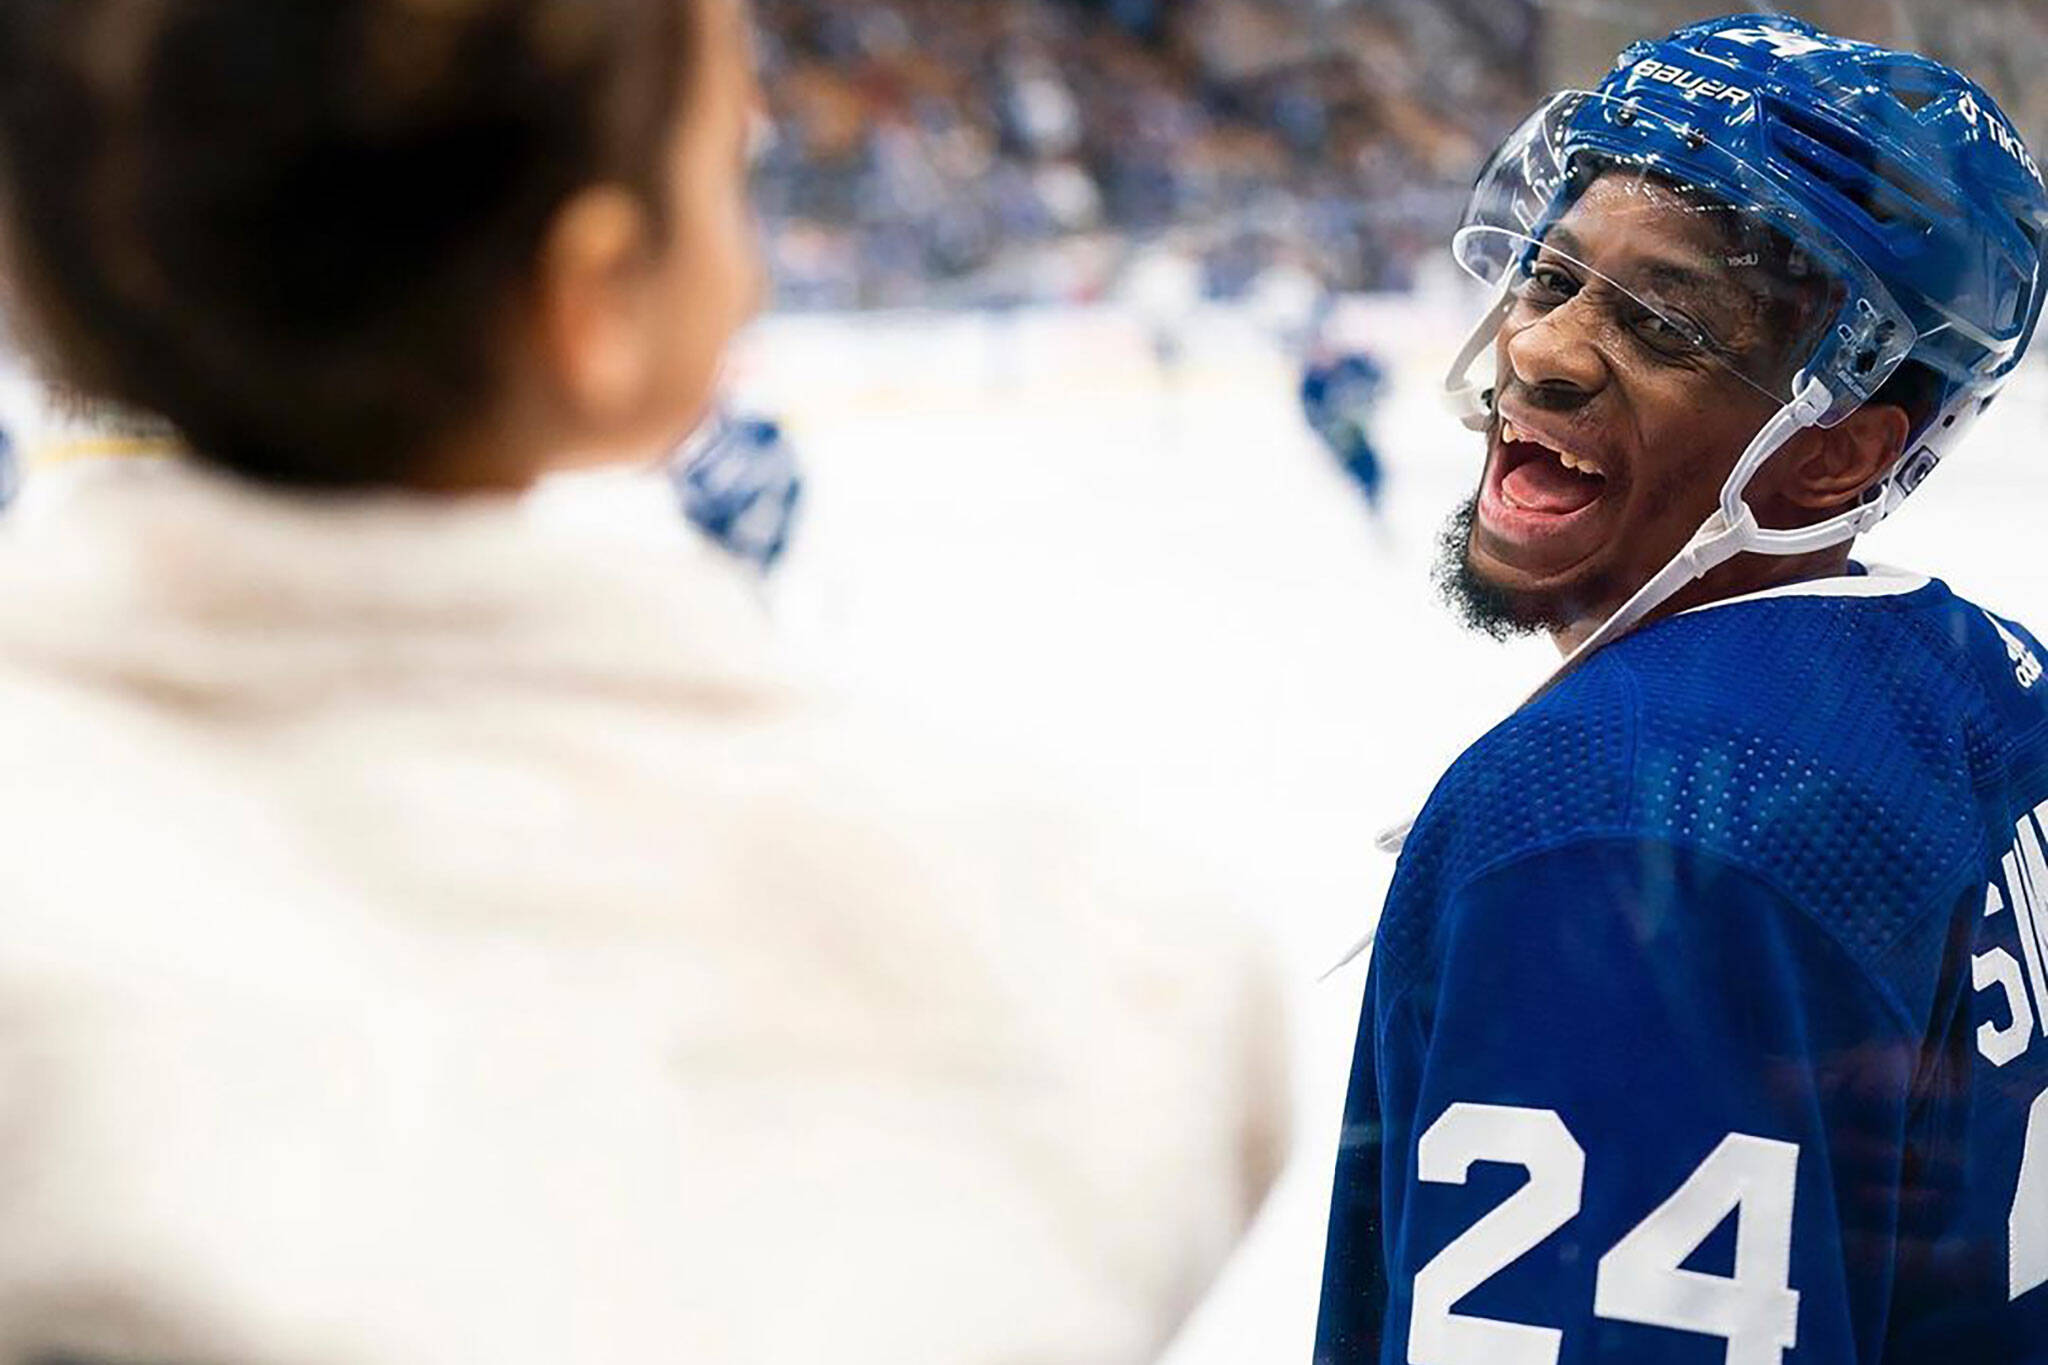 SIMMONS: Maple Leafs' season on the brink